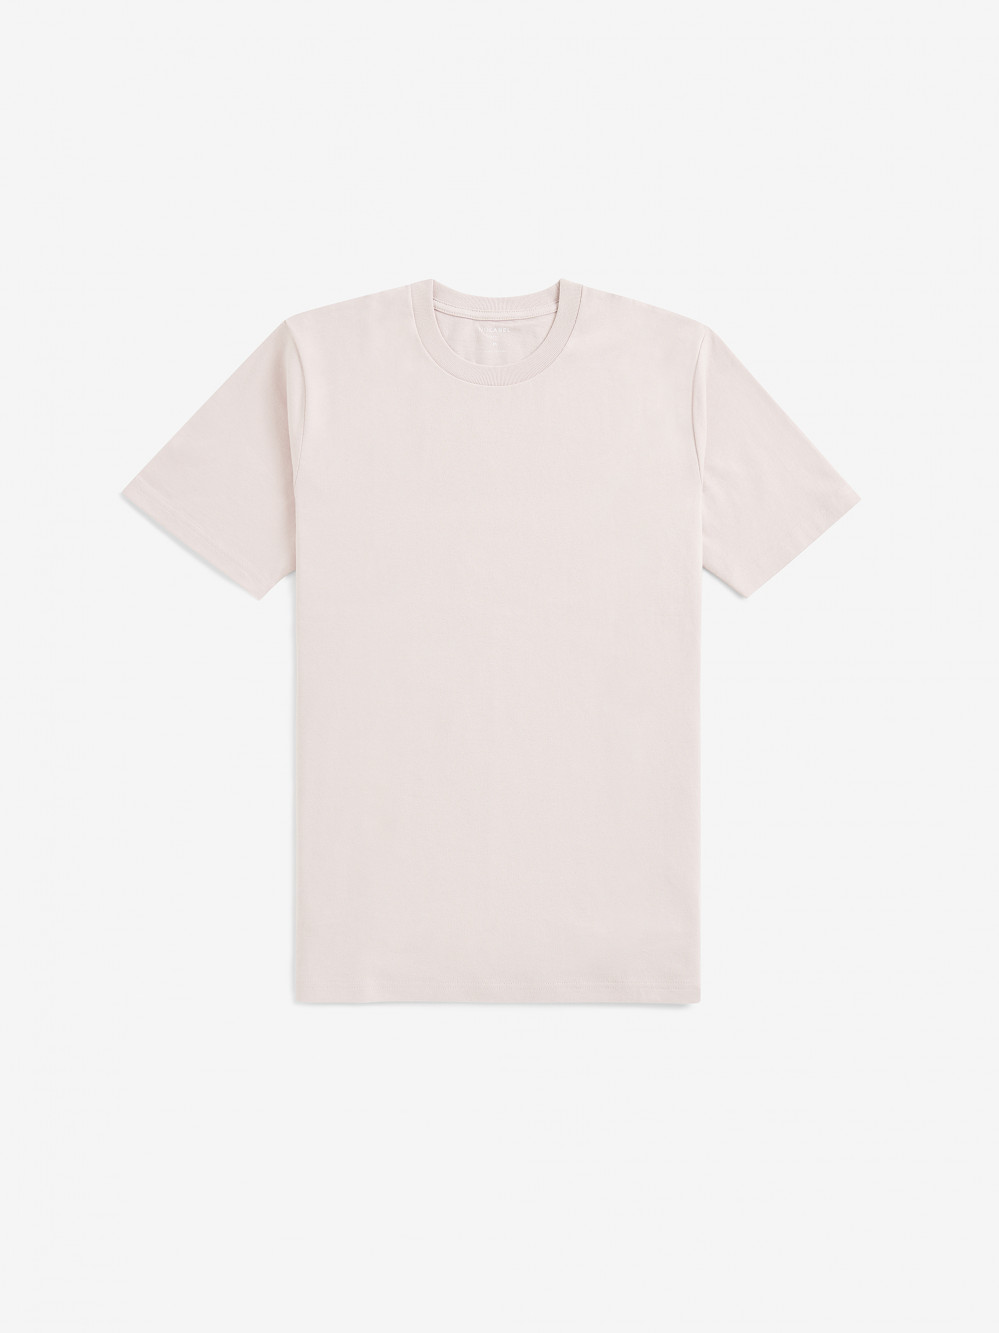 T-shirt pastelkleuren licht roze